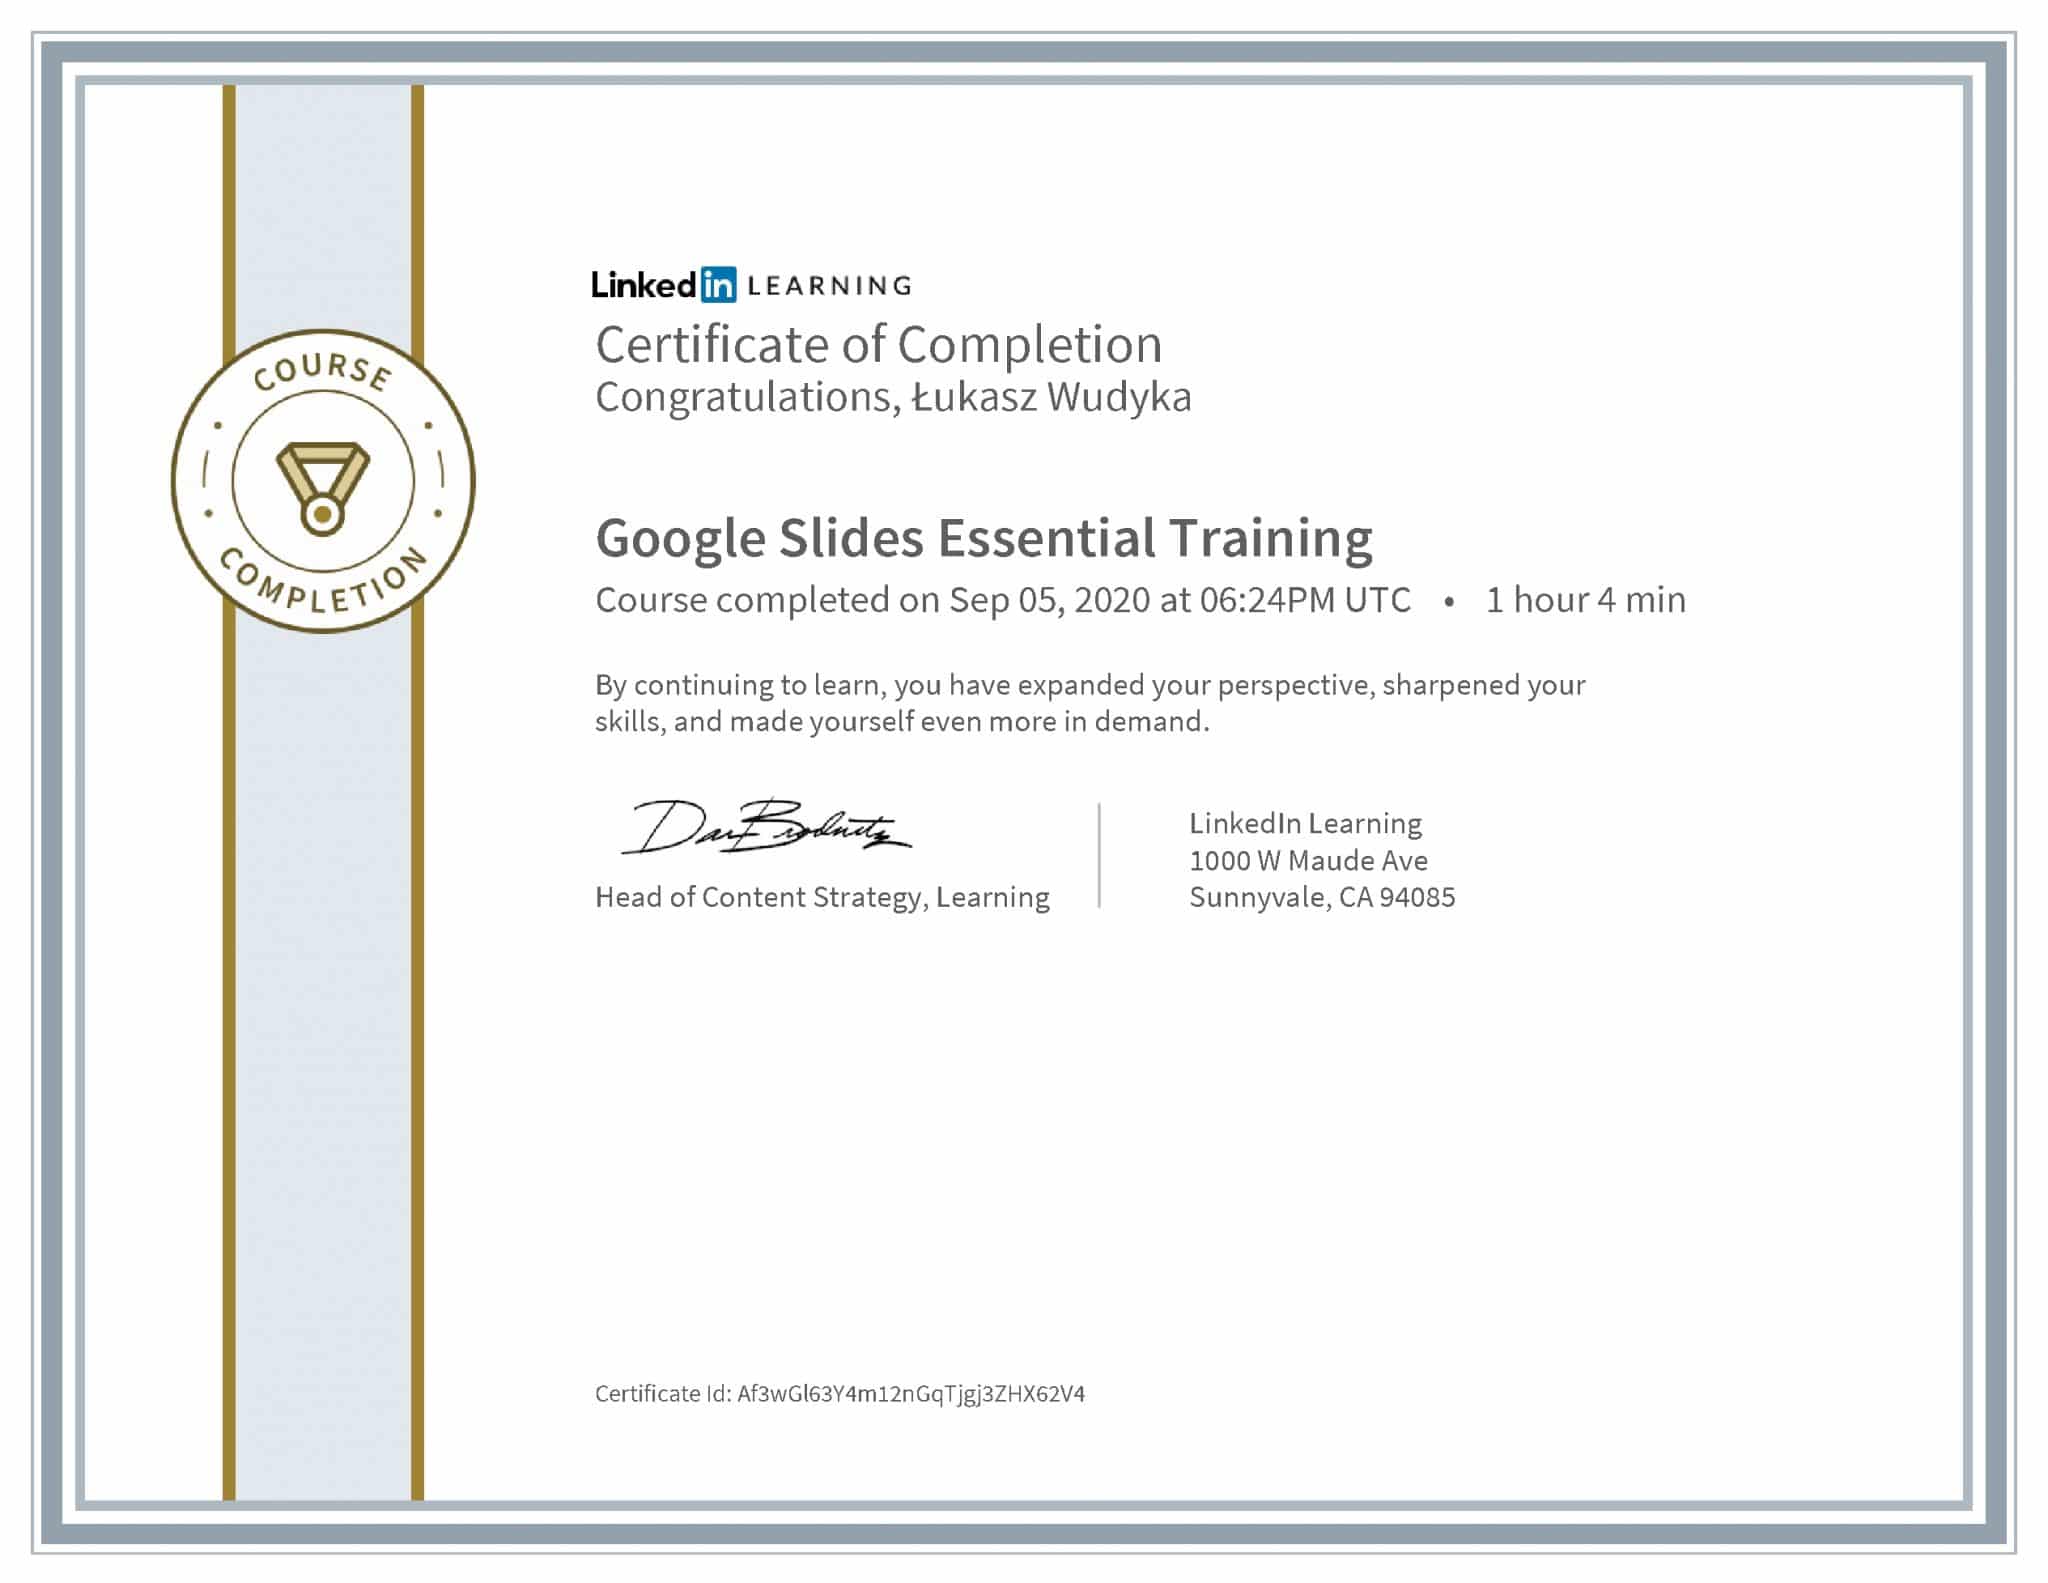 Łukasz Wudyka certyfikat LinkedIn Google Slides Essential Training